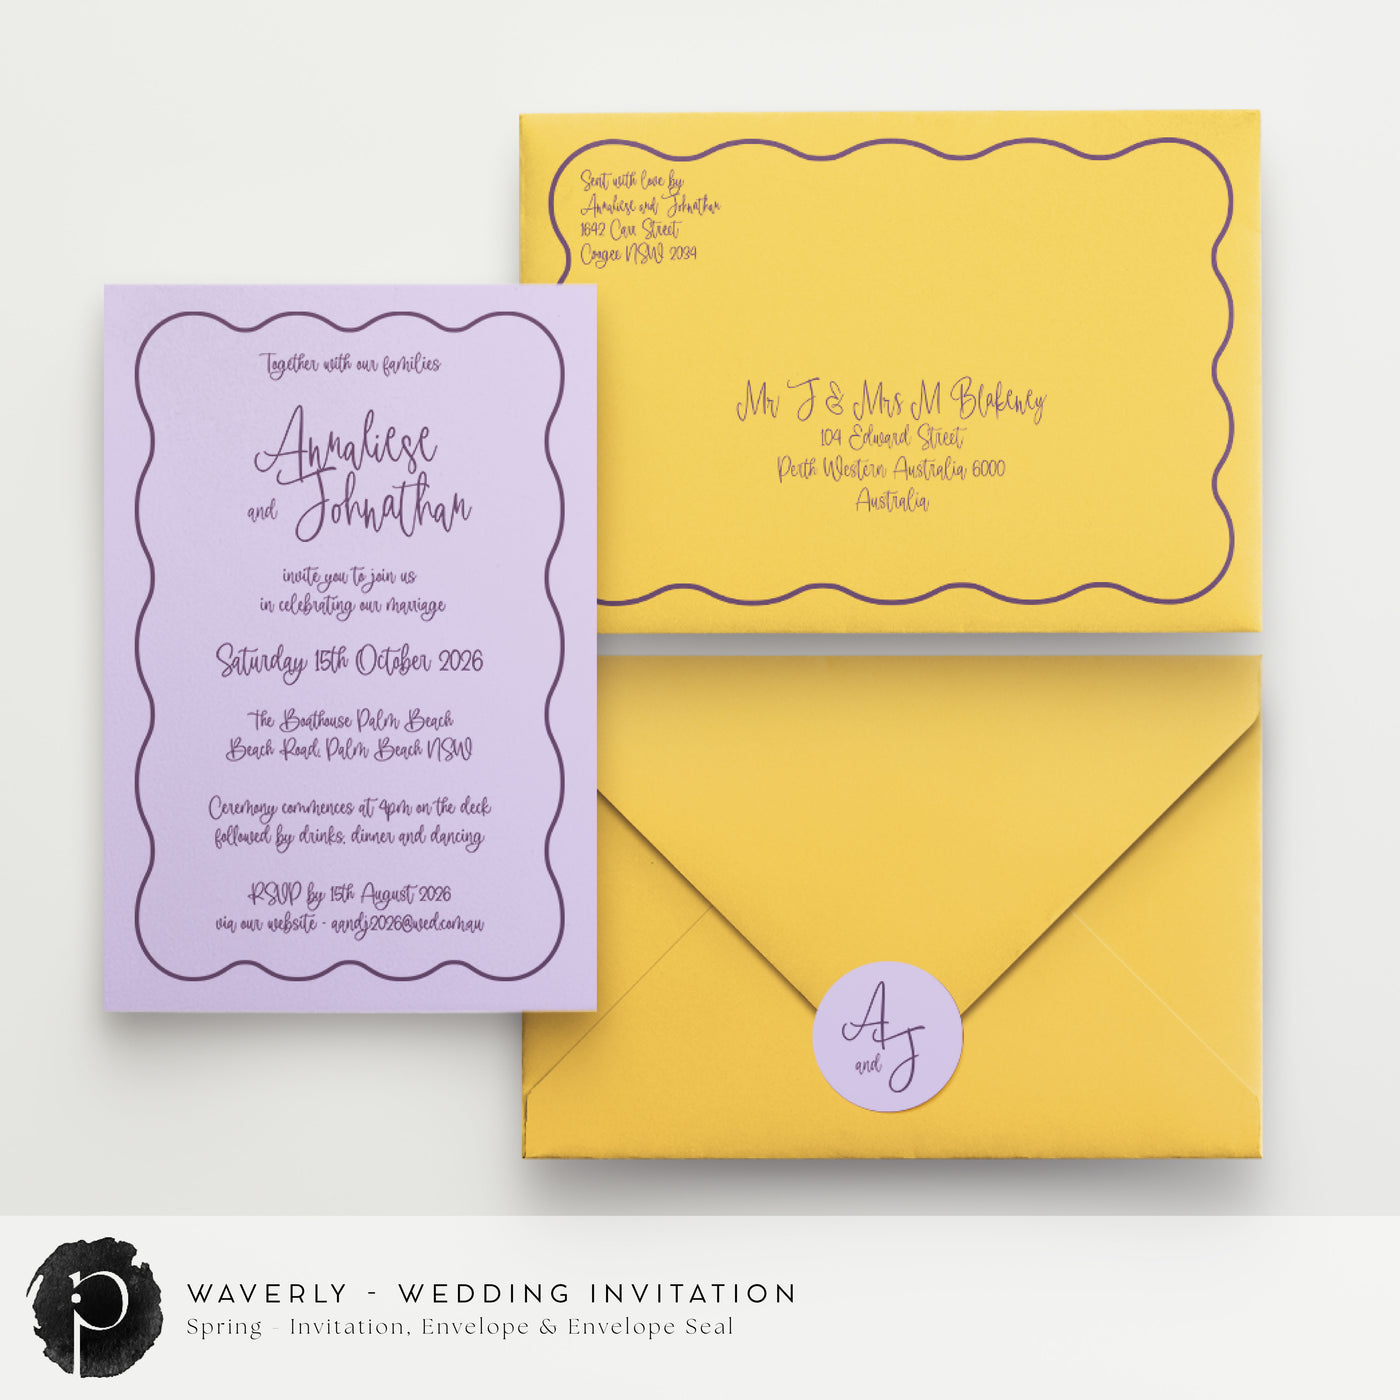 Waverly - Wedding Invitations